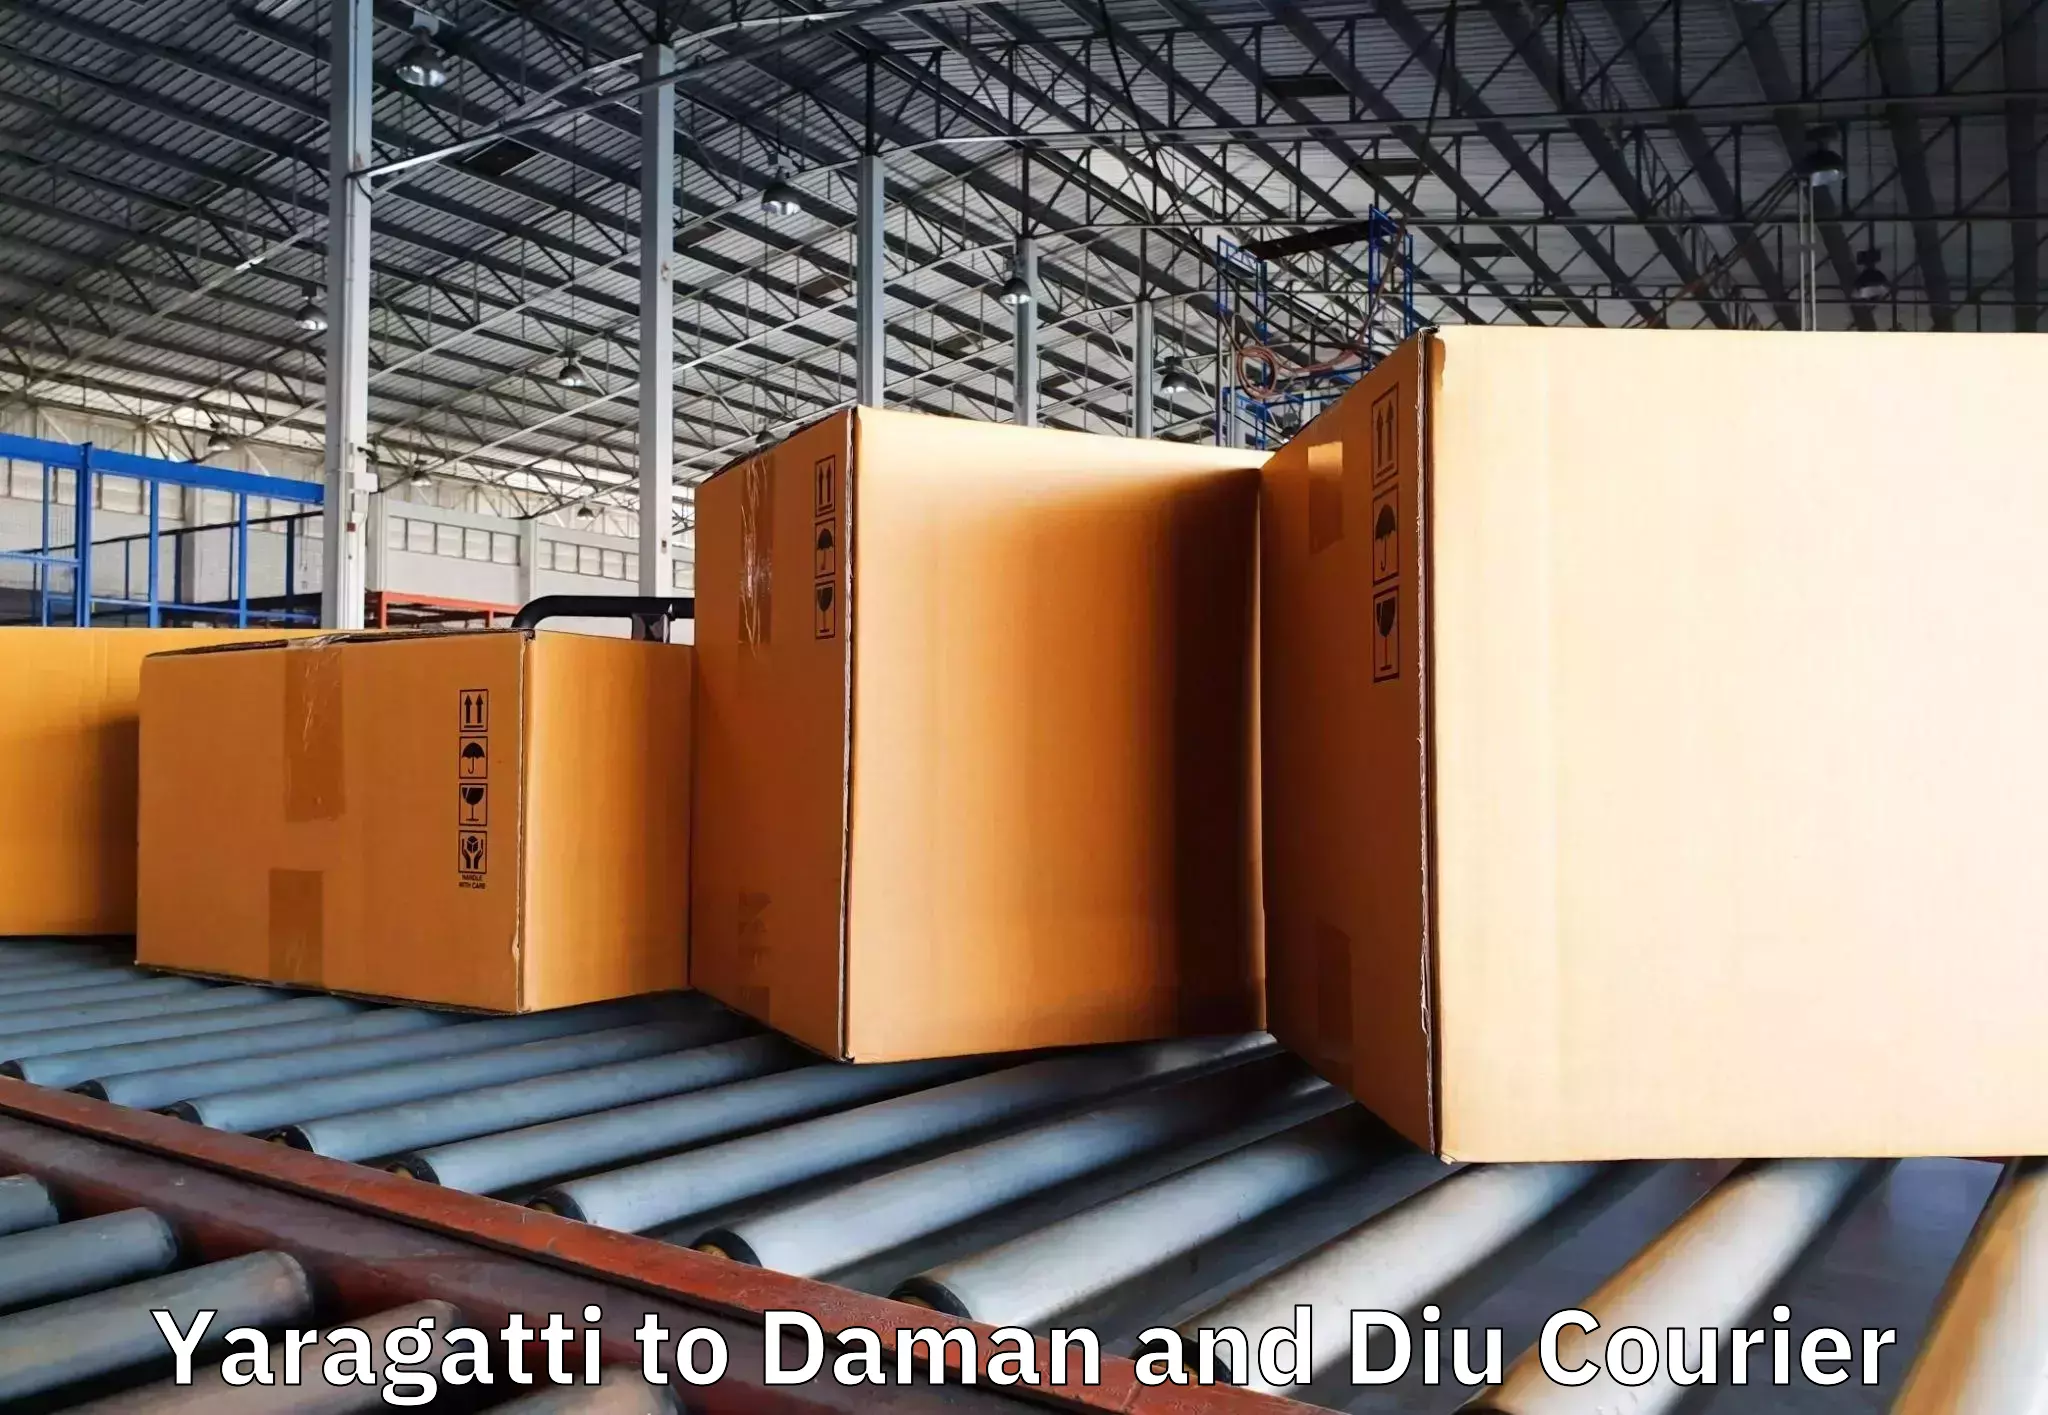 Moving and packing experts Yaragatti to Daman and Diu